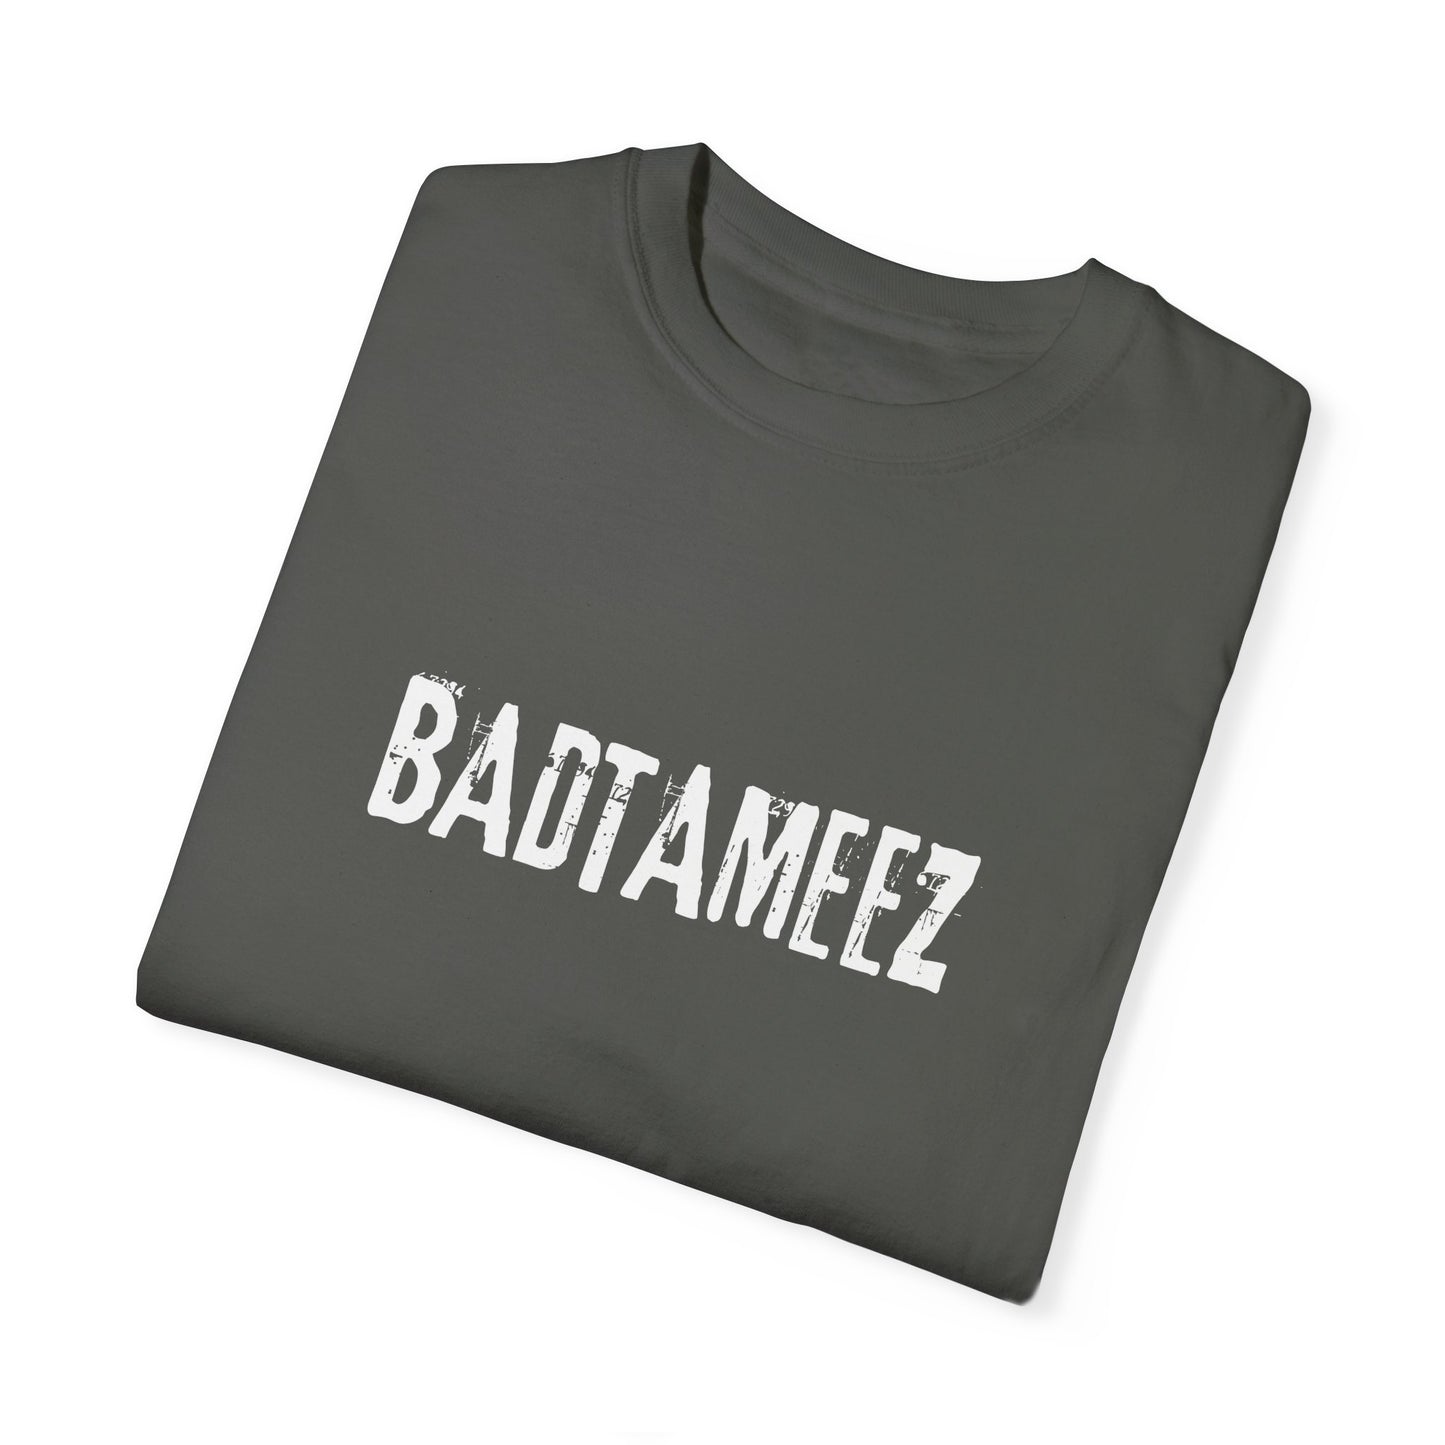 Badtameez T-shirt